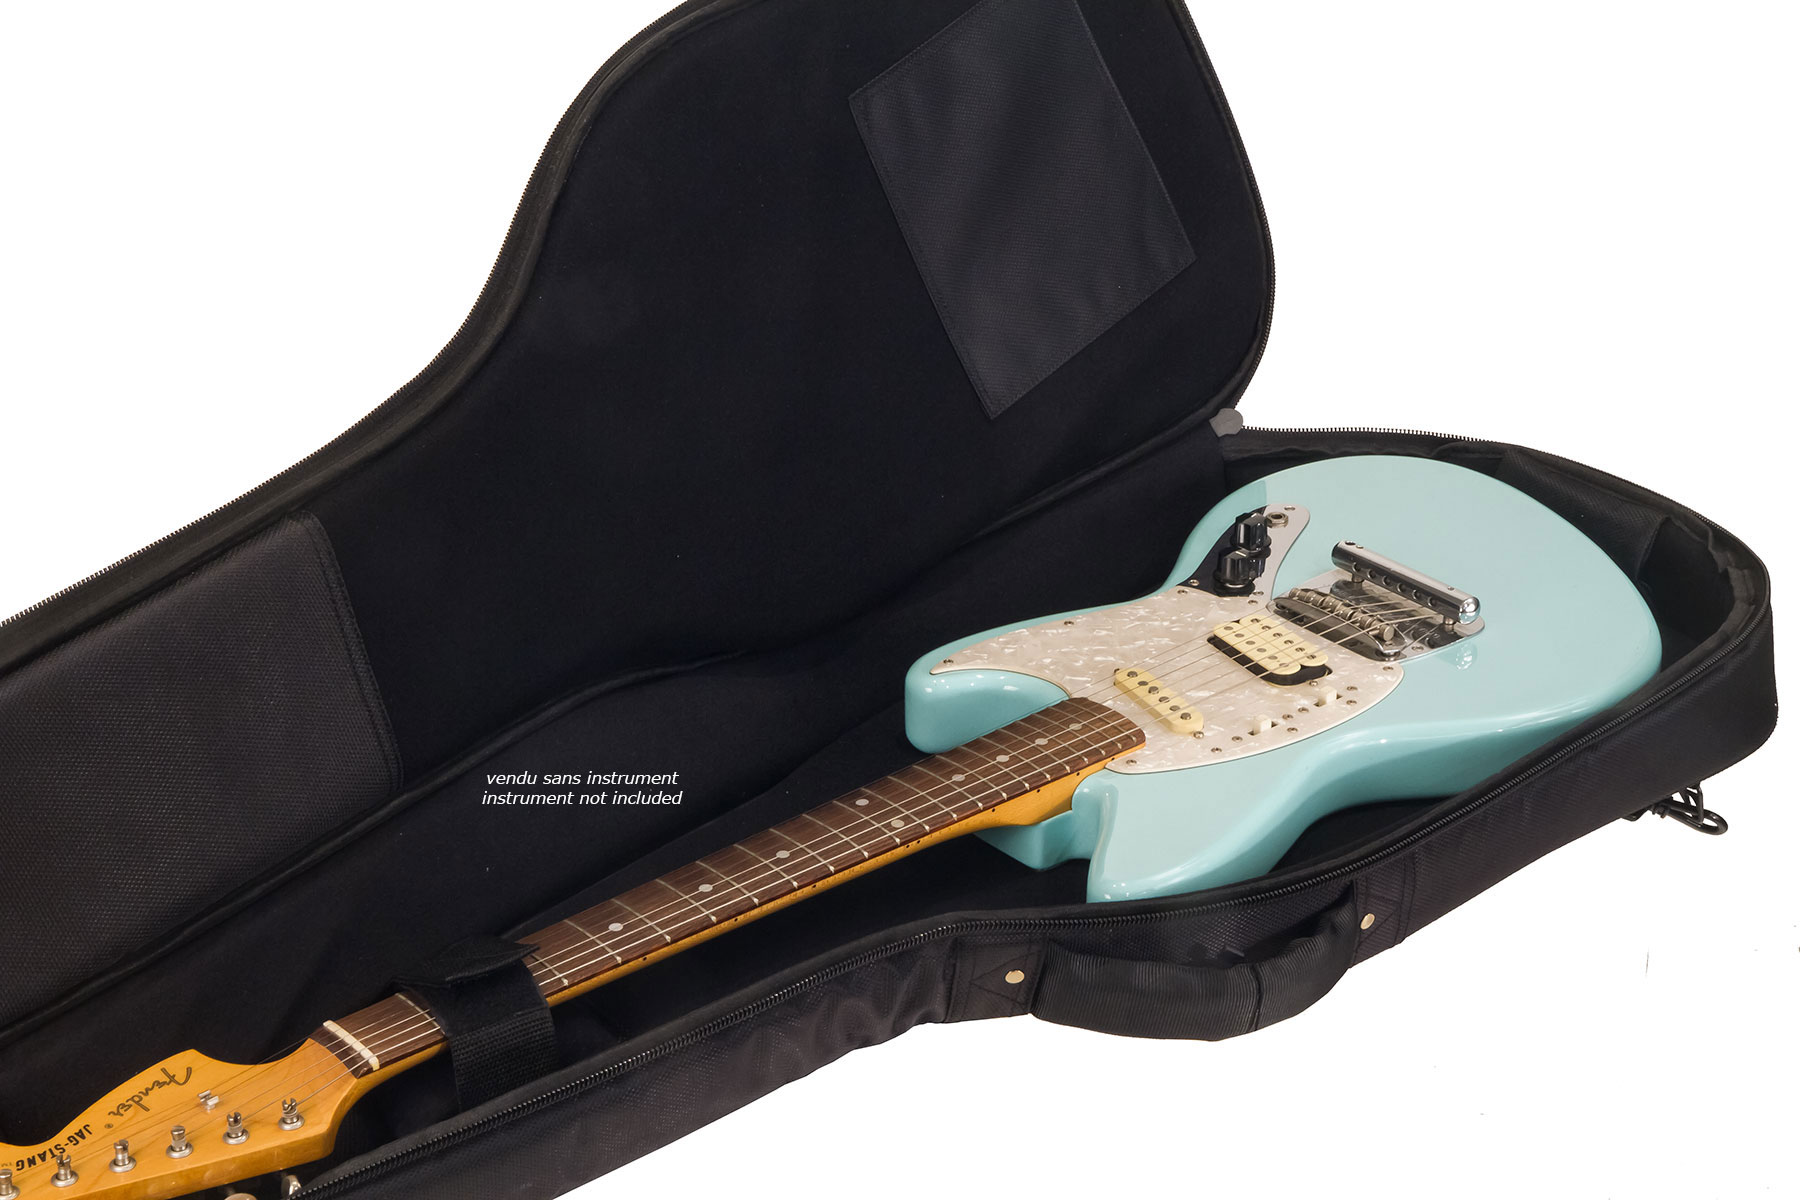 X-tone 2020 Ele-bk Light Deluxe Electric Guitar Bag Black (2083) - Tasche für E-Gitarren - Variation 5